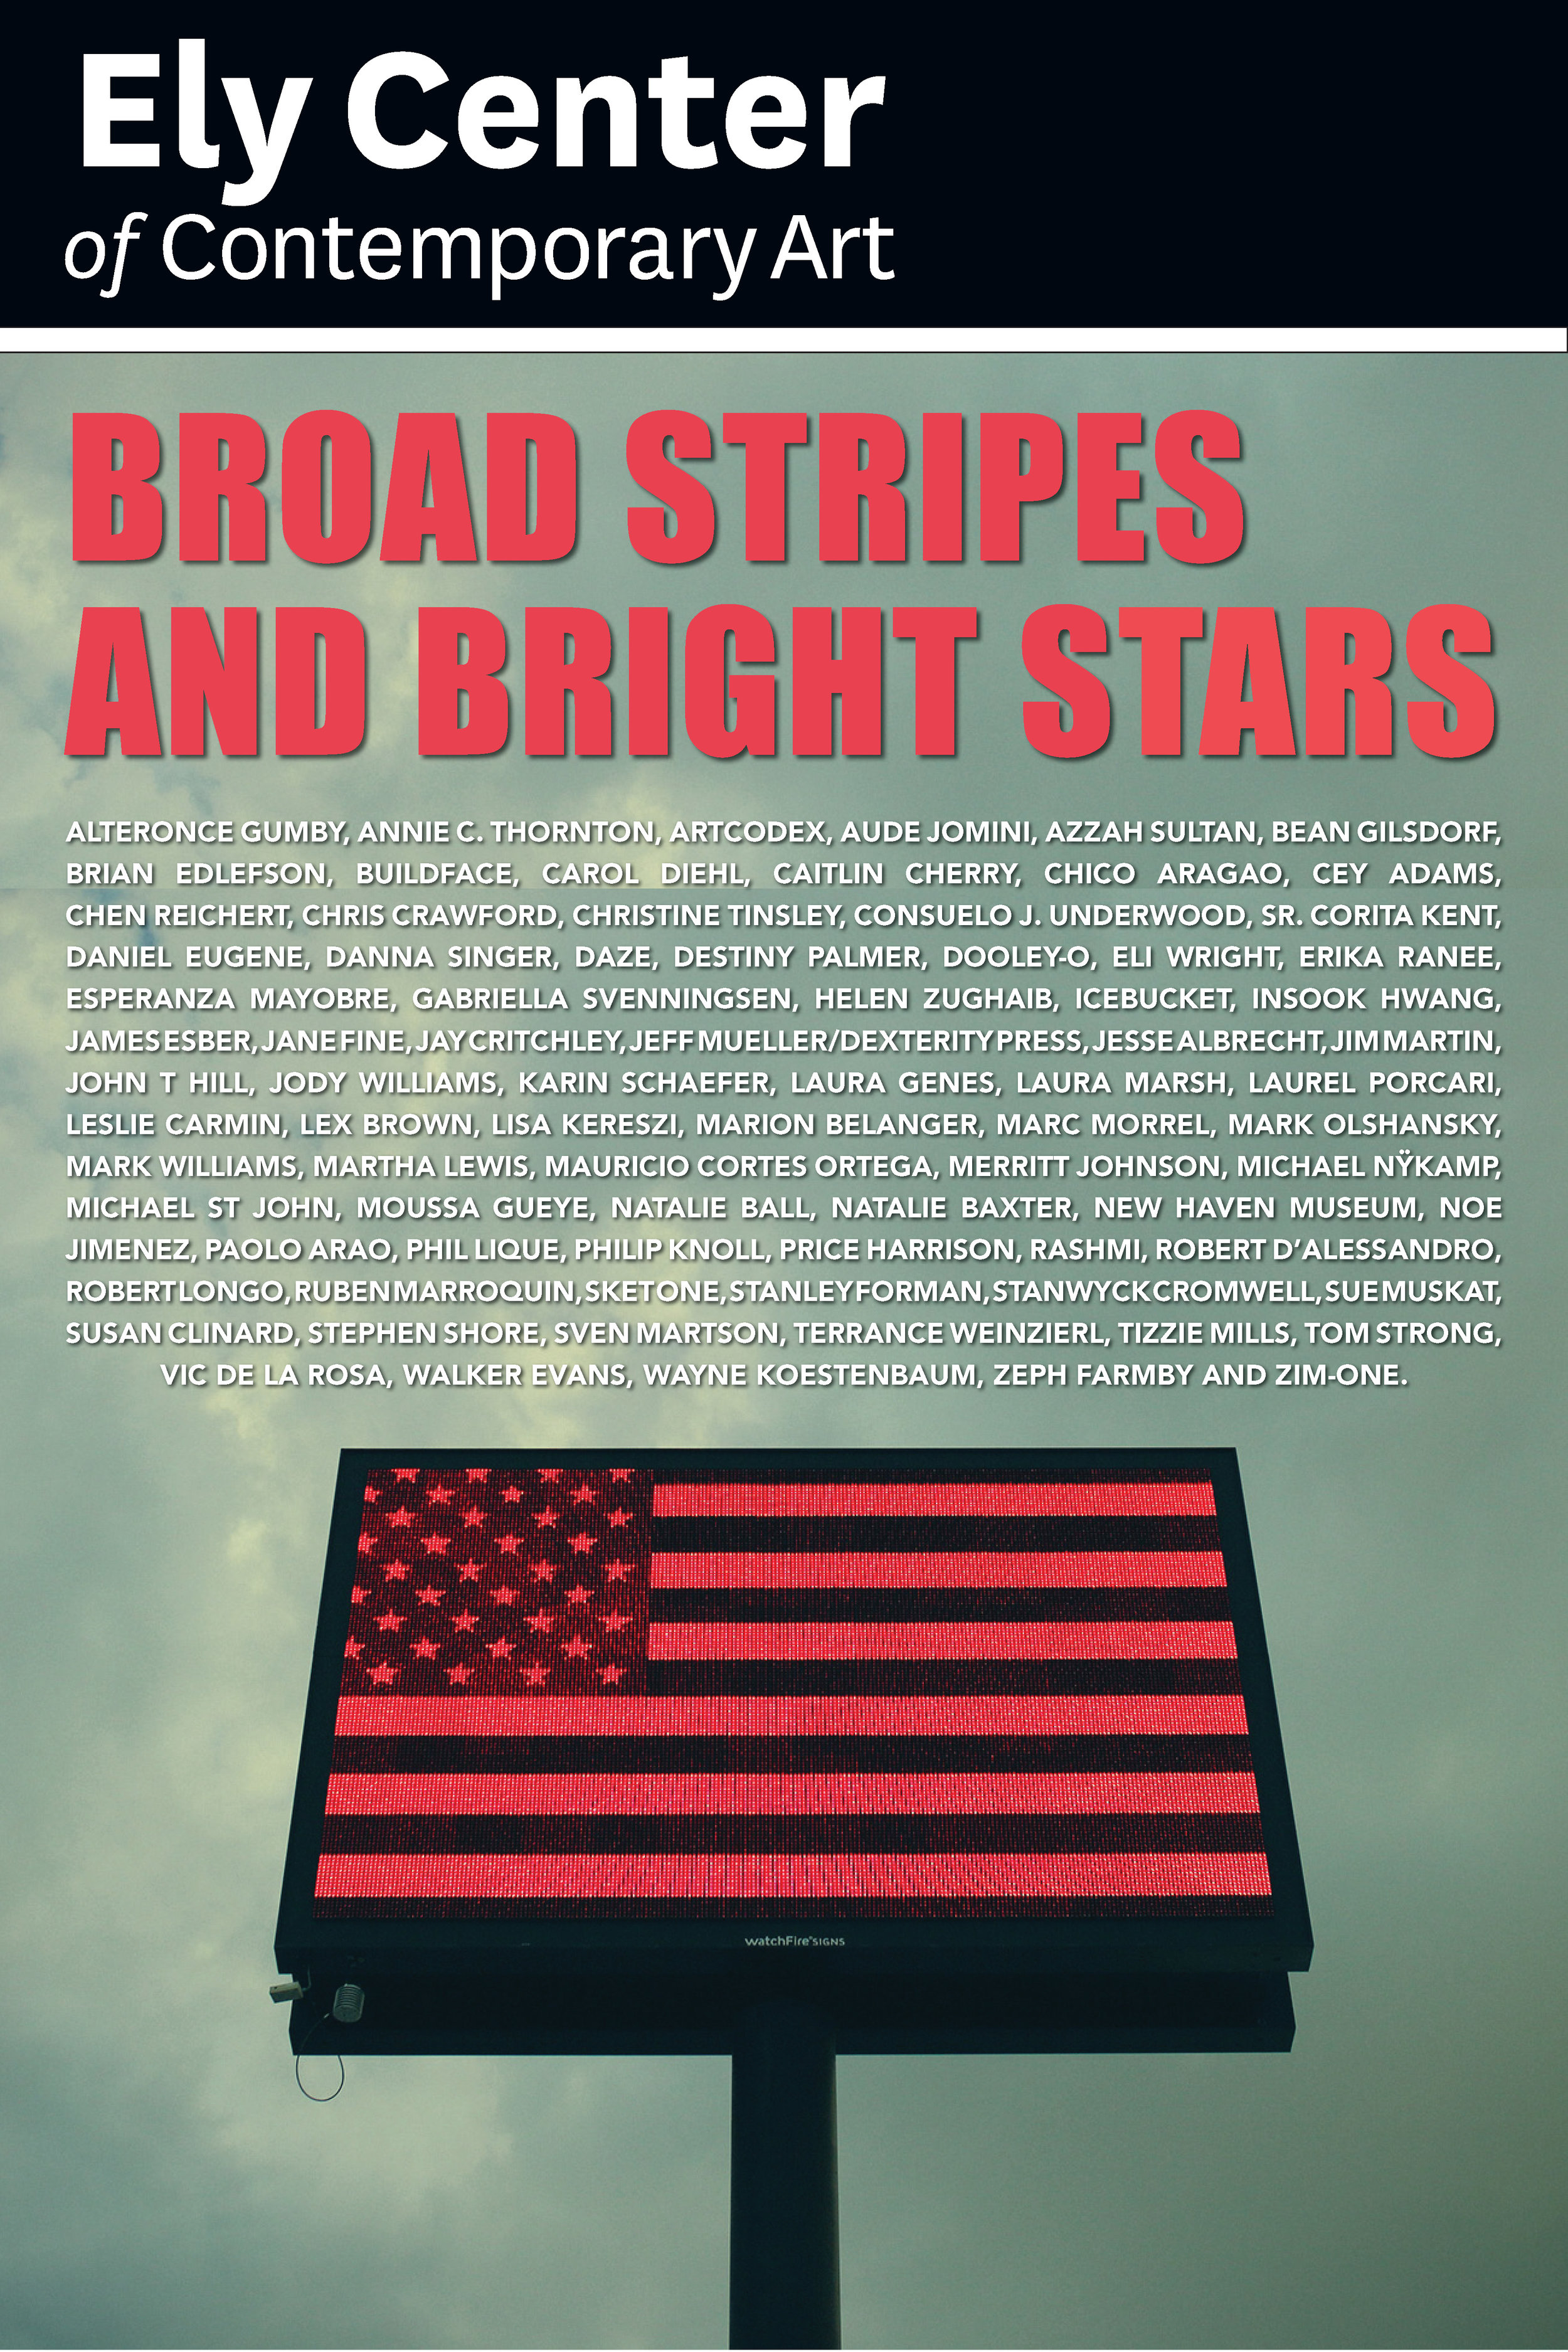 Broad Stripes and Bright Stars